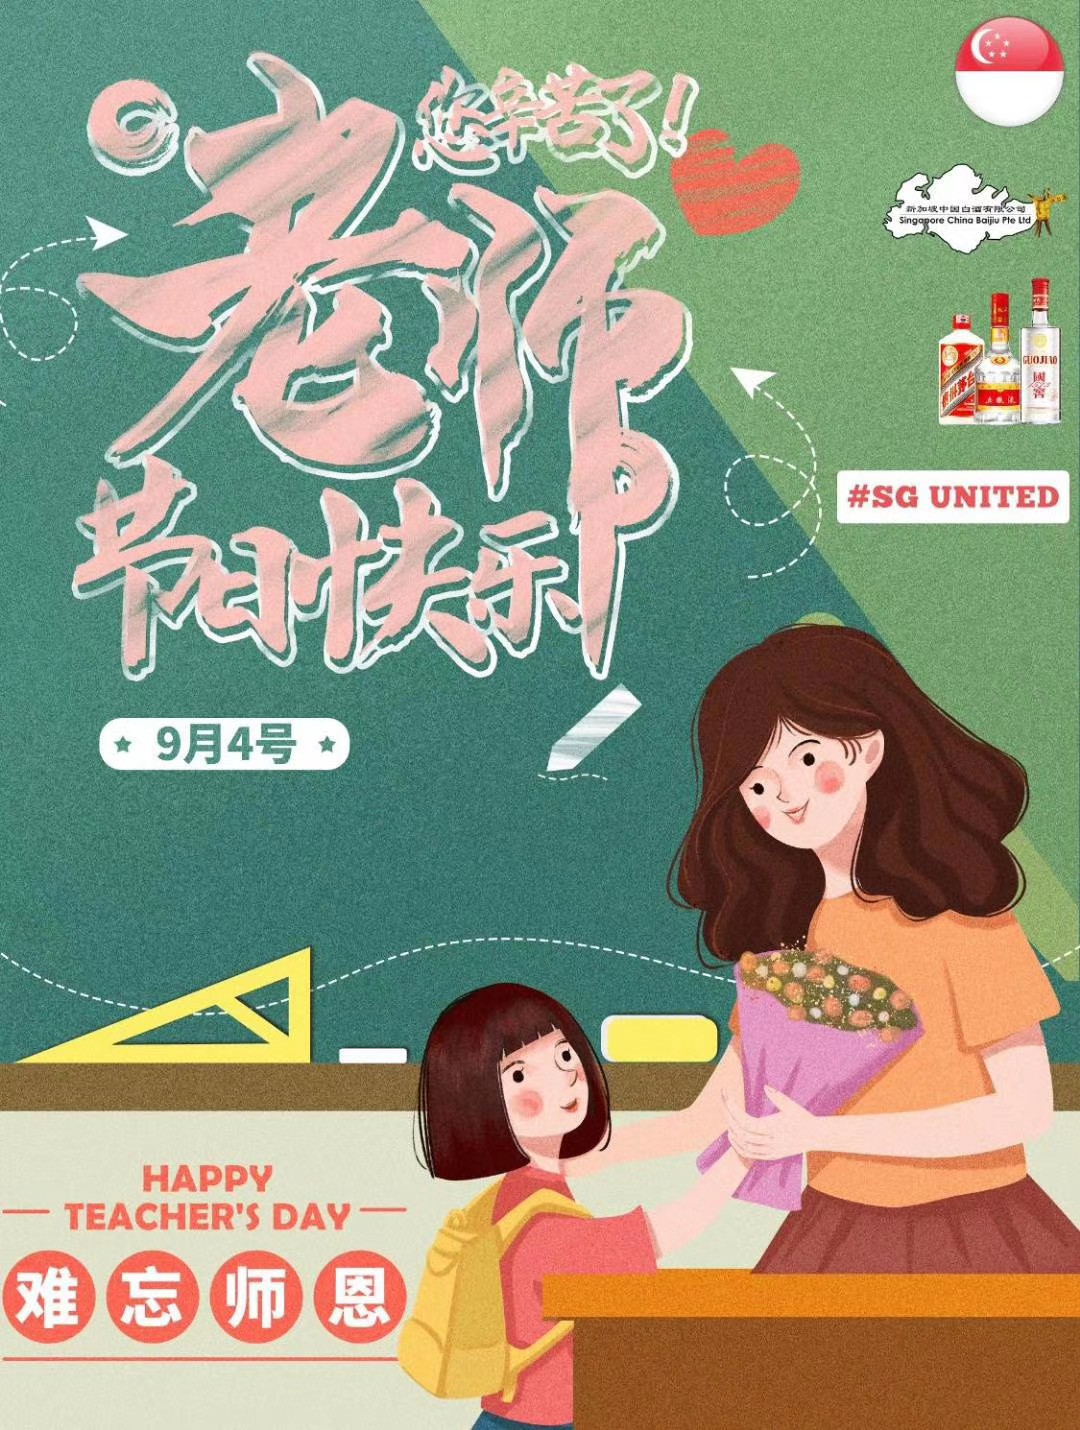 090920 - Teacher's Day.jpg